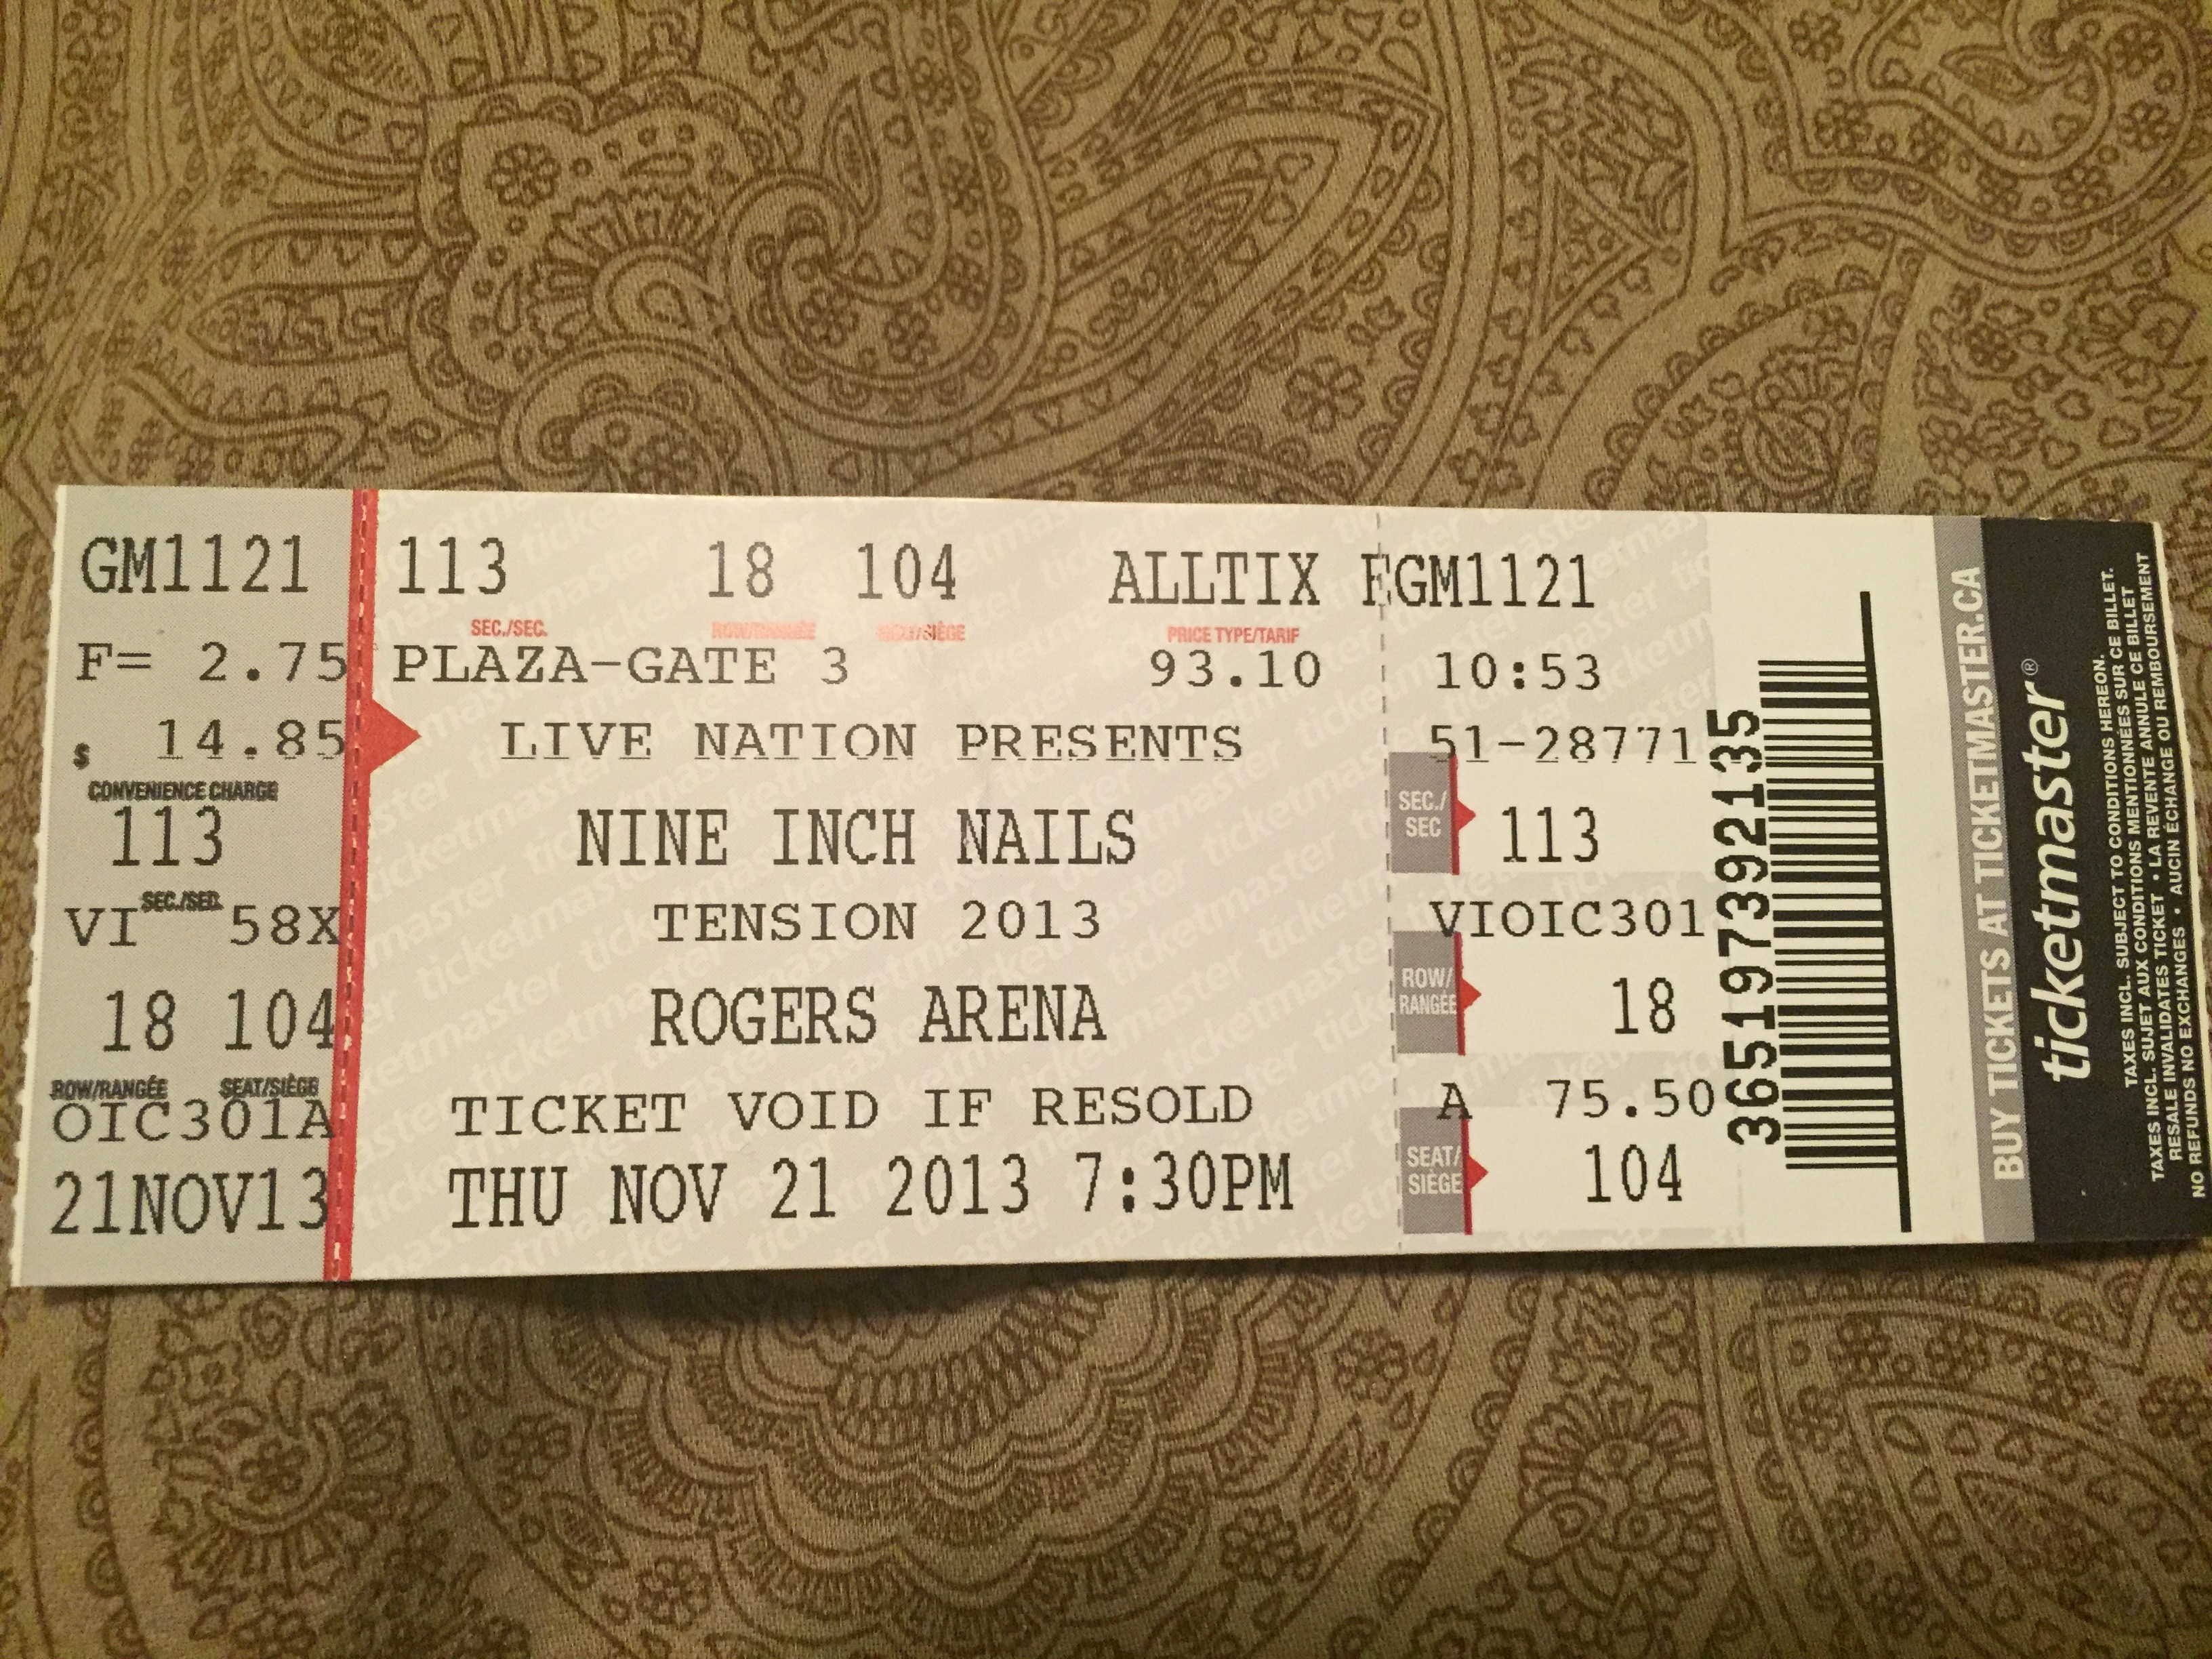 2013/11/21 Ticket